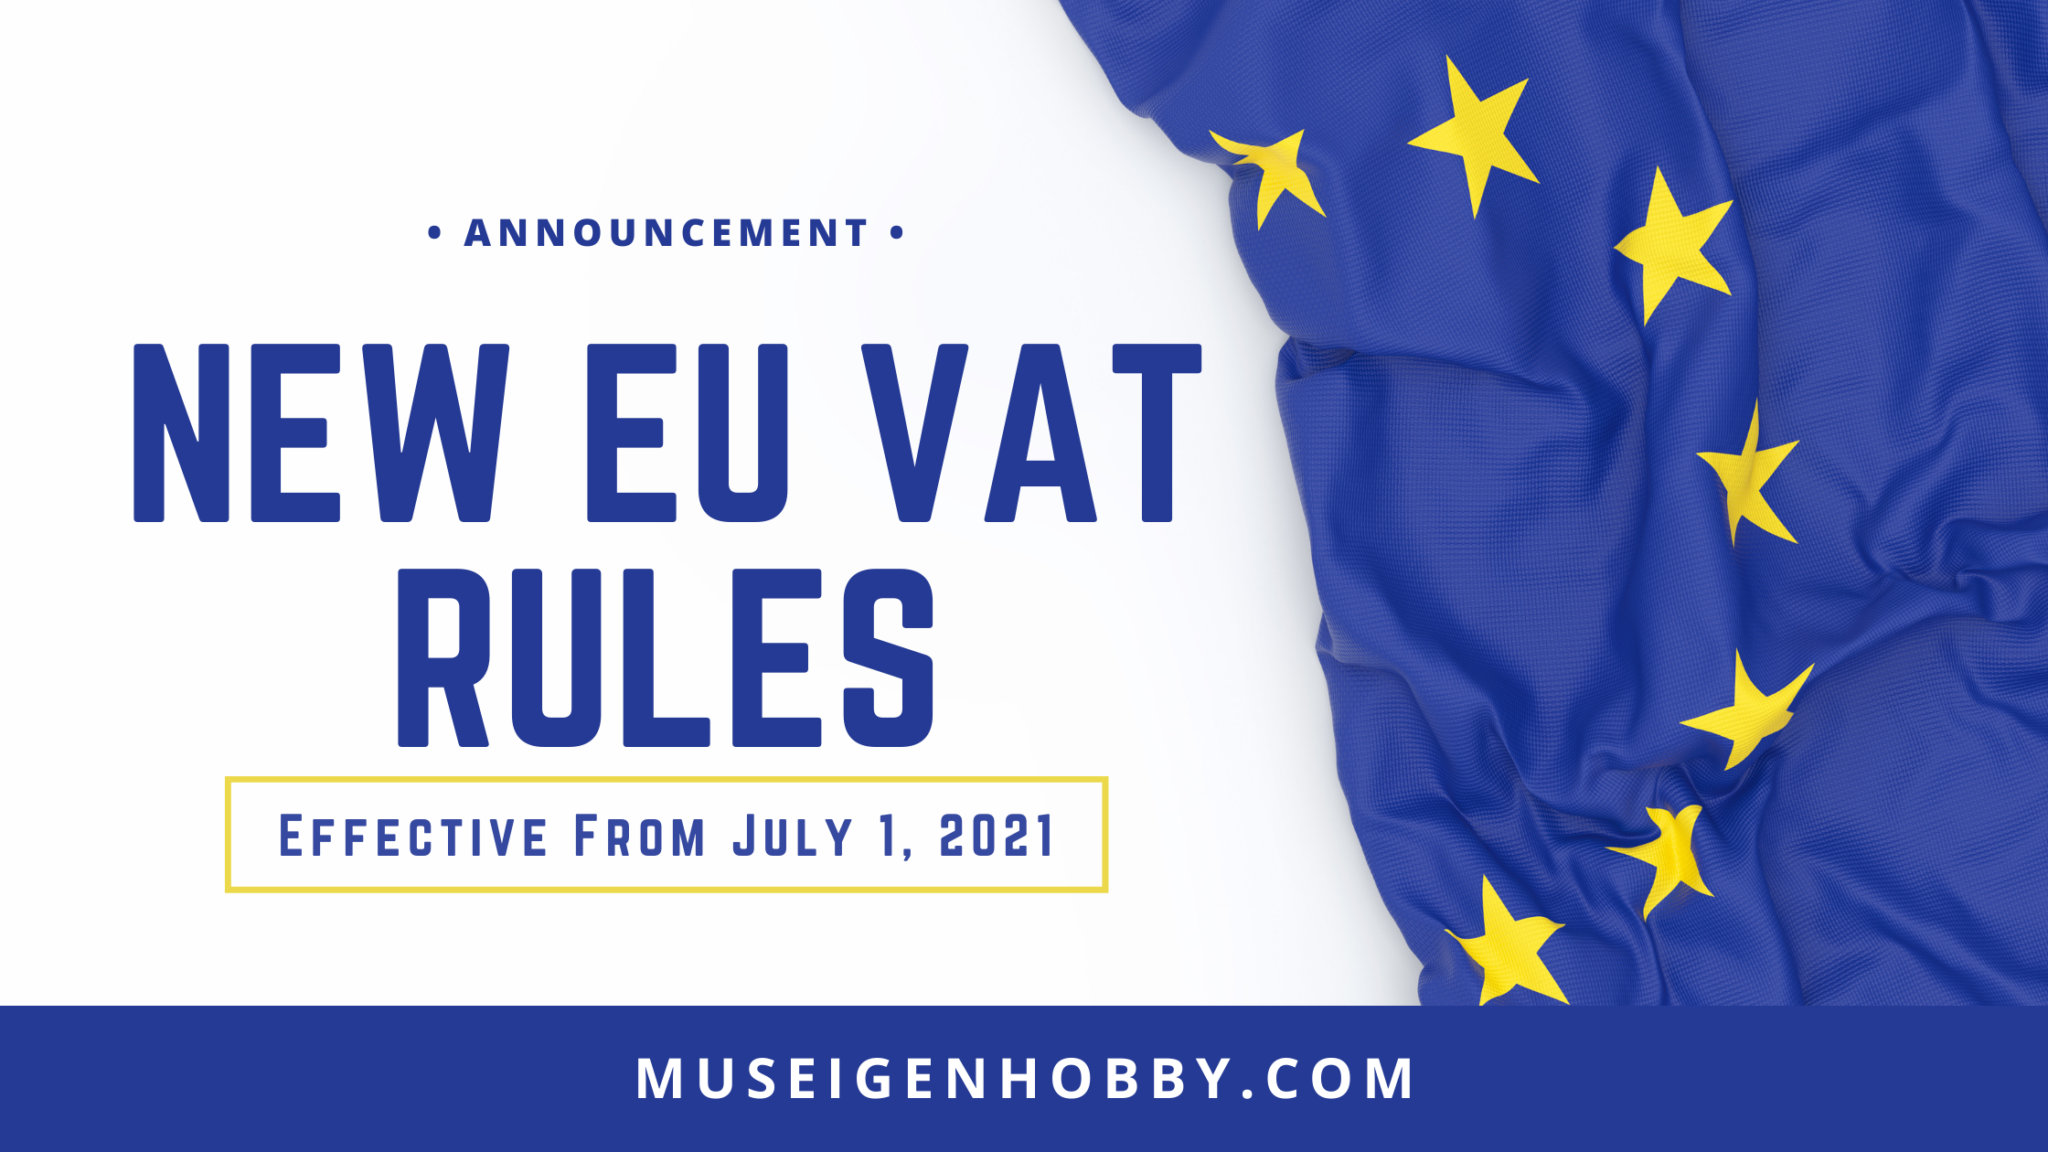 New EU VAT Rules Announcement